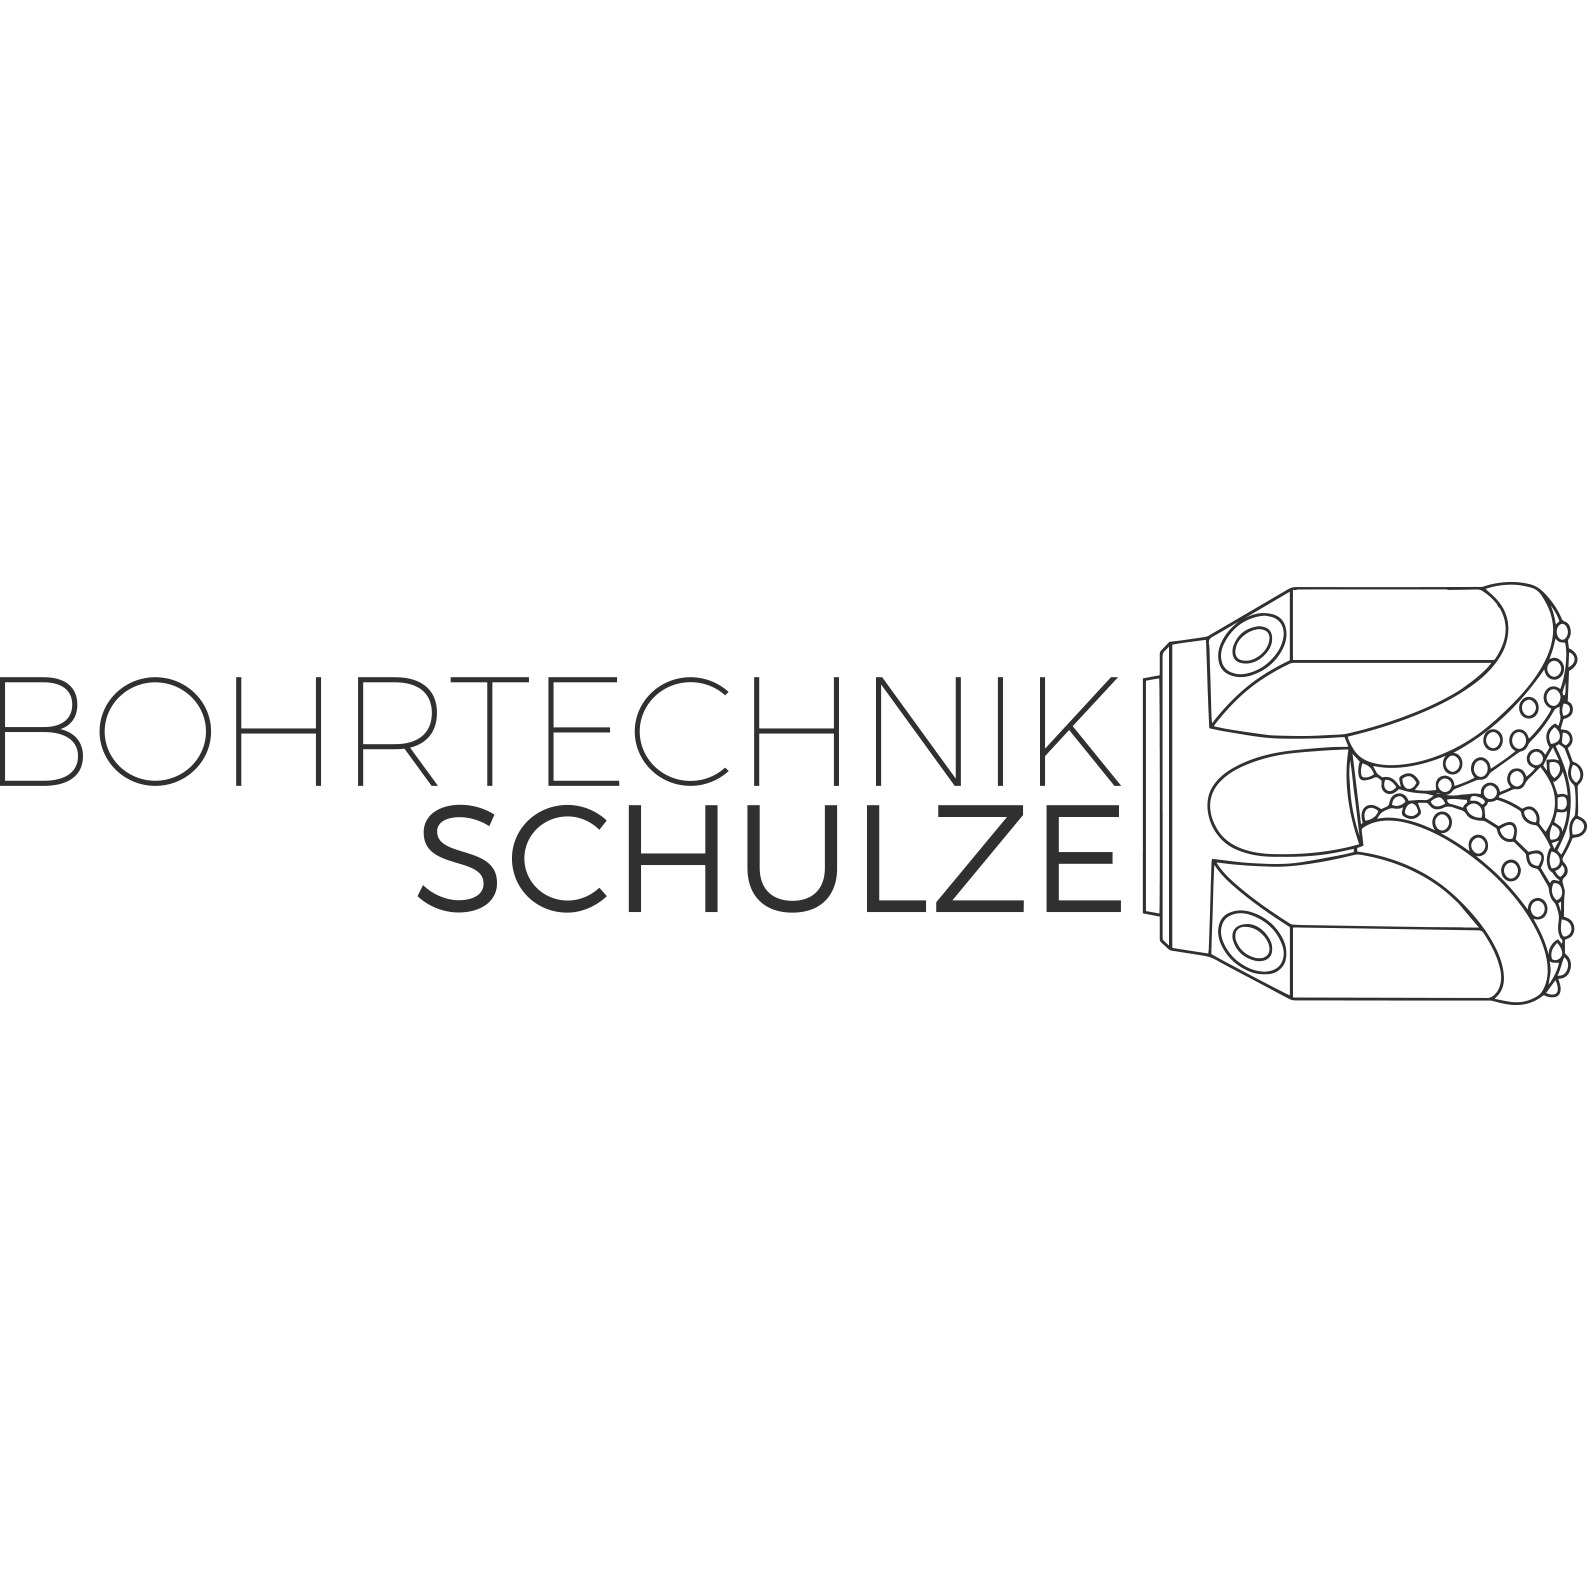 Bohrtechnik Schulze GmbH & Co. KG Inh. Christian Schulze Logo